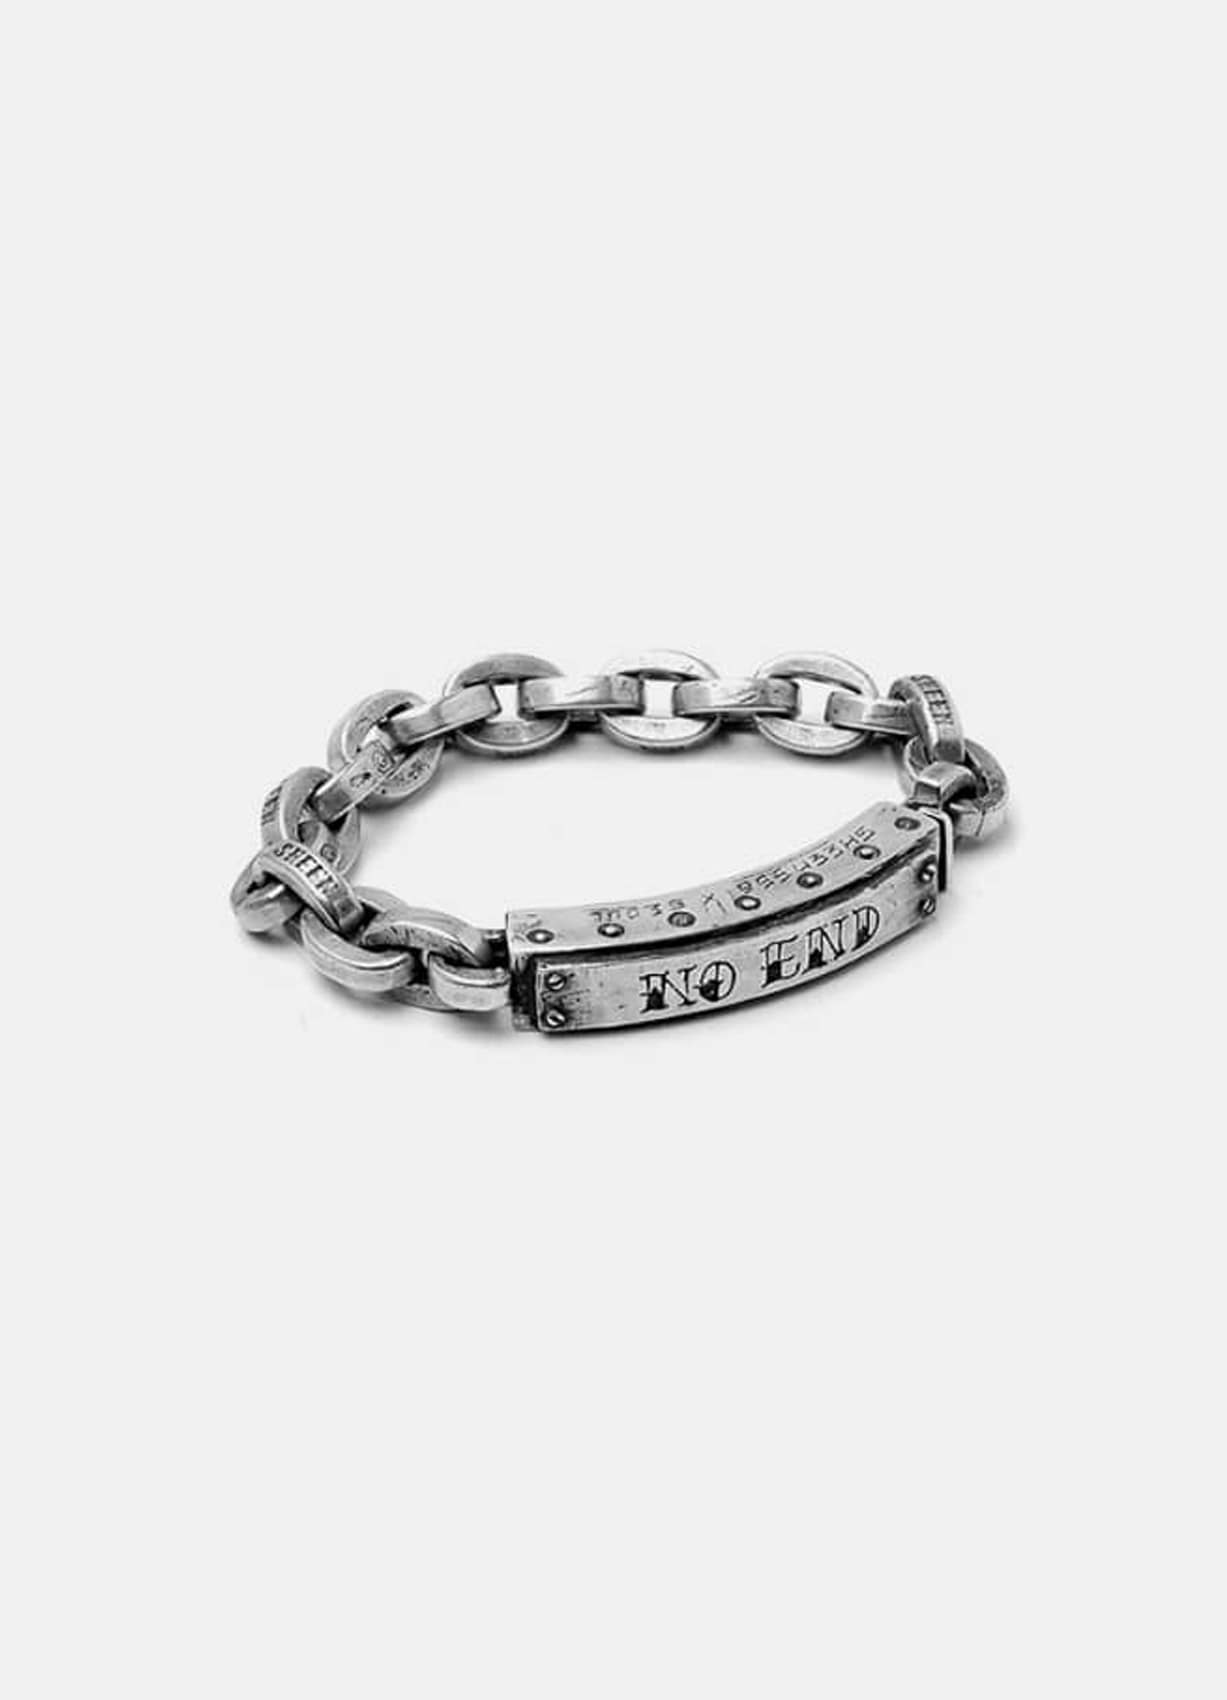 No End 505 Chain Custom Silver Bracelet